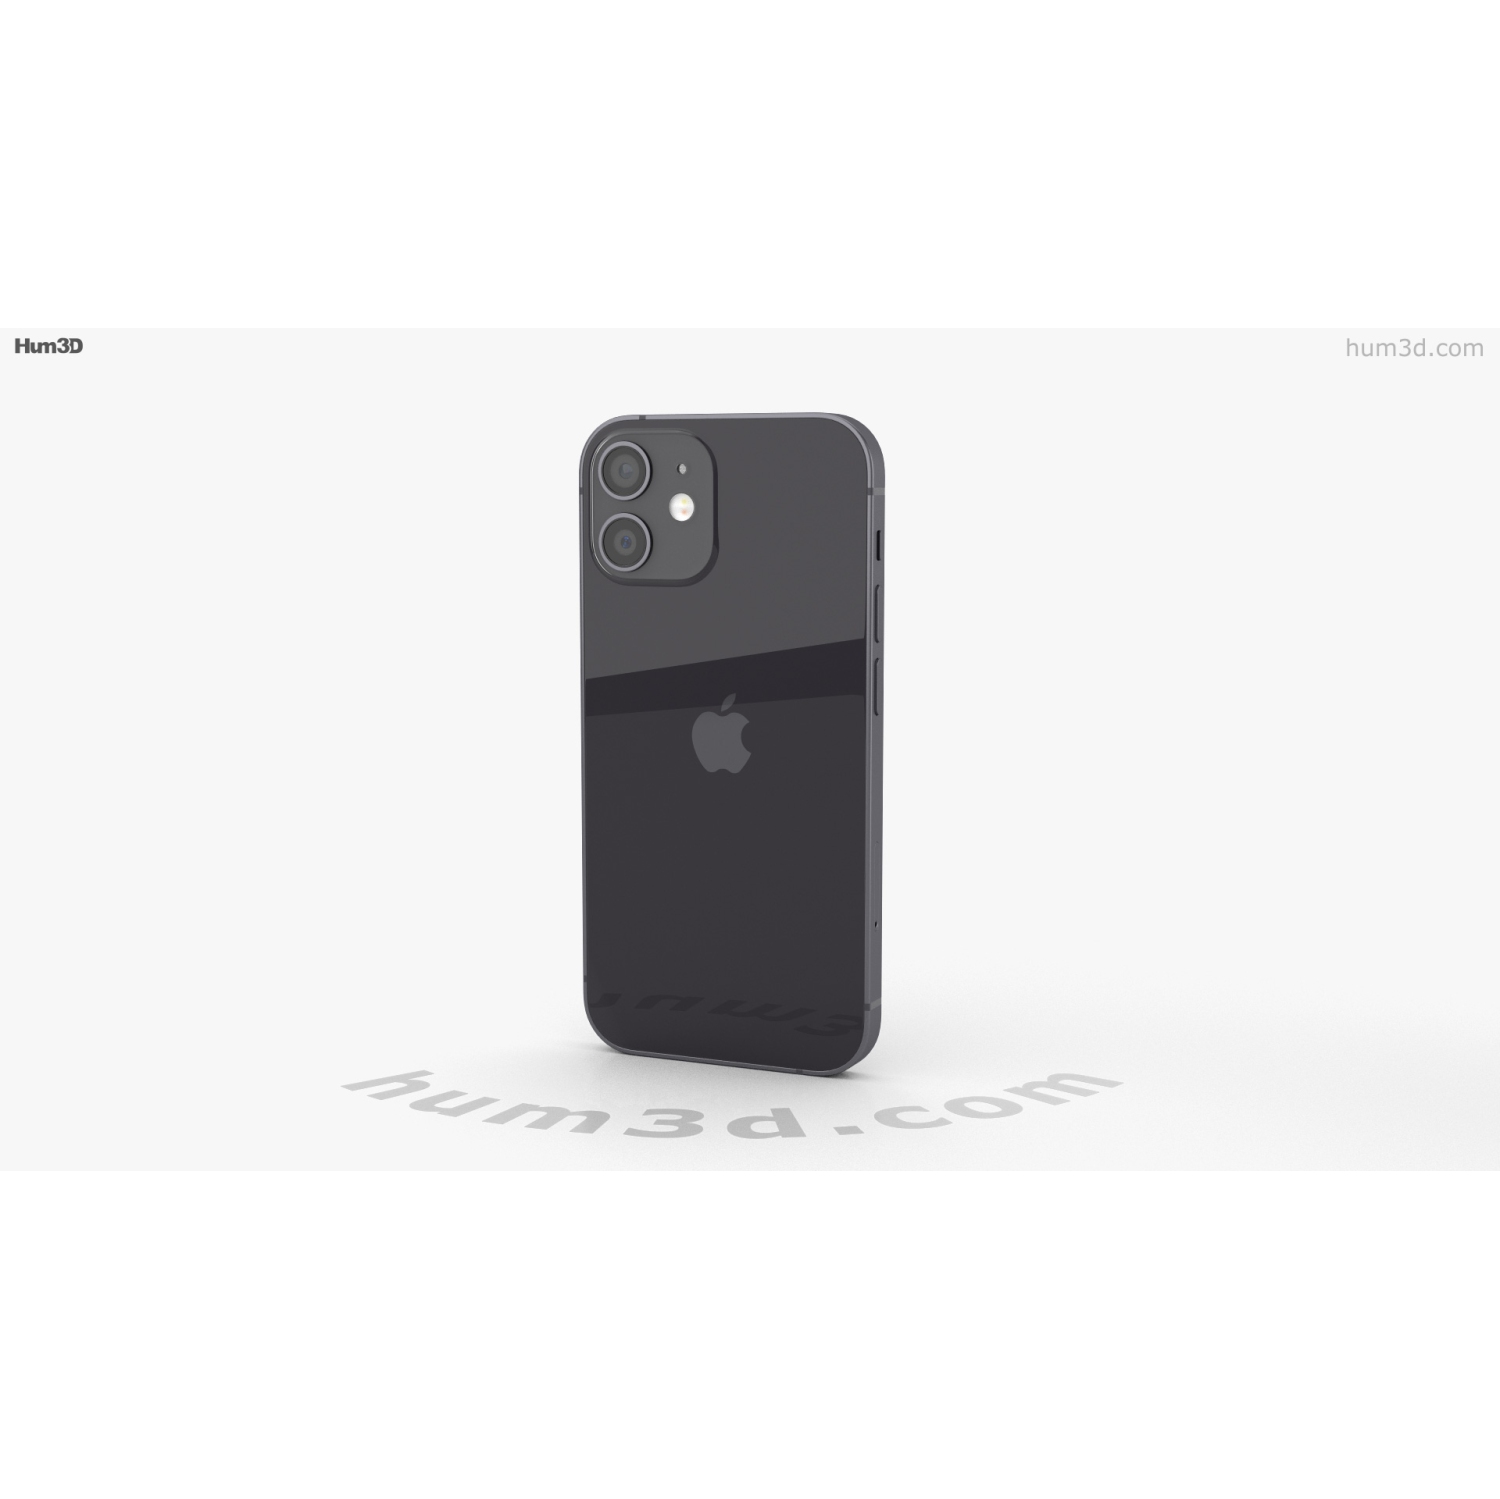 Apple Iphone 12 64GB Smartphone Black Unlocked Open Box